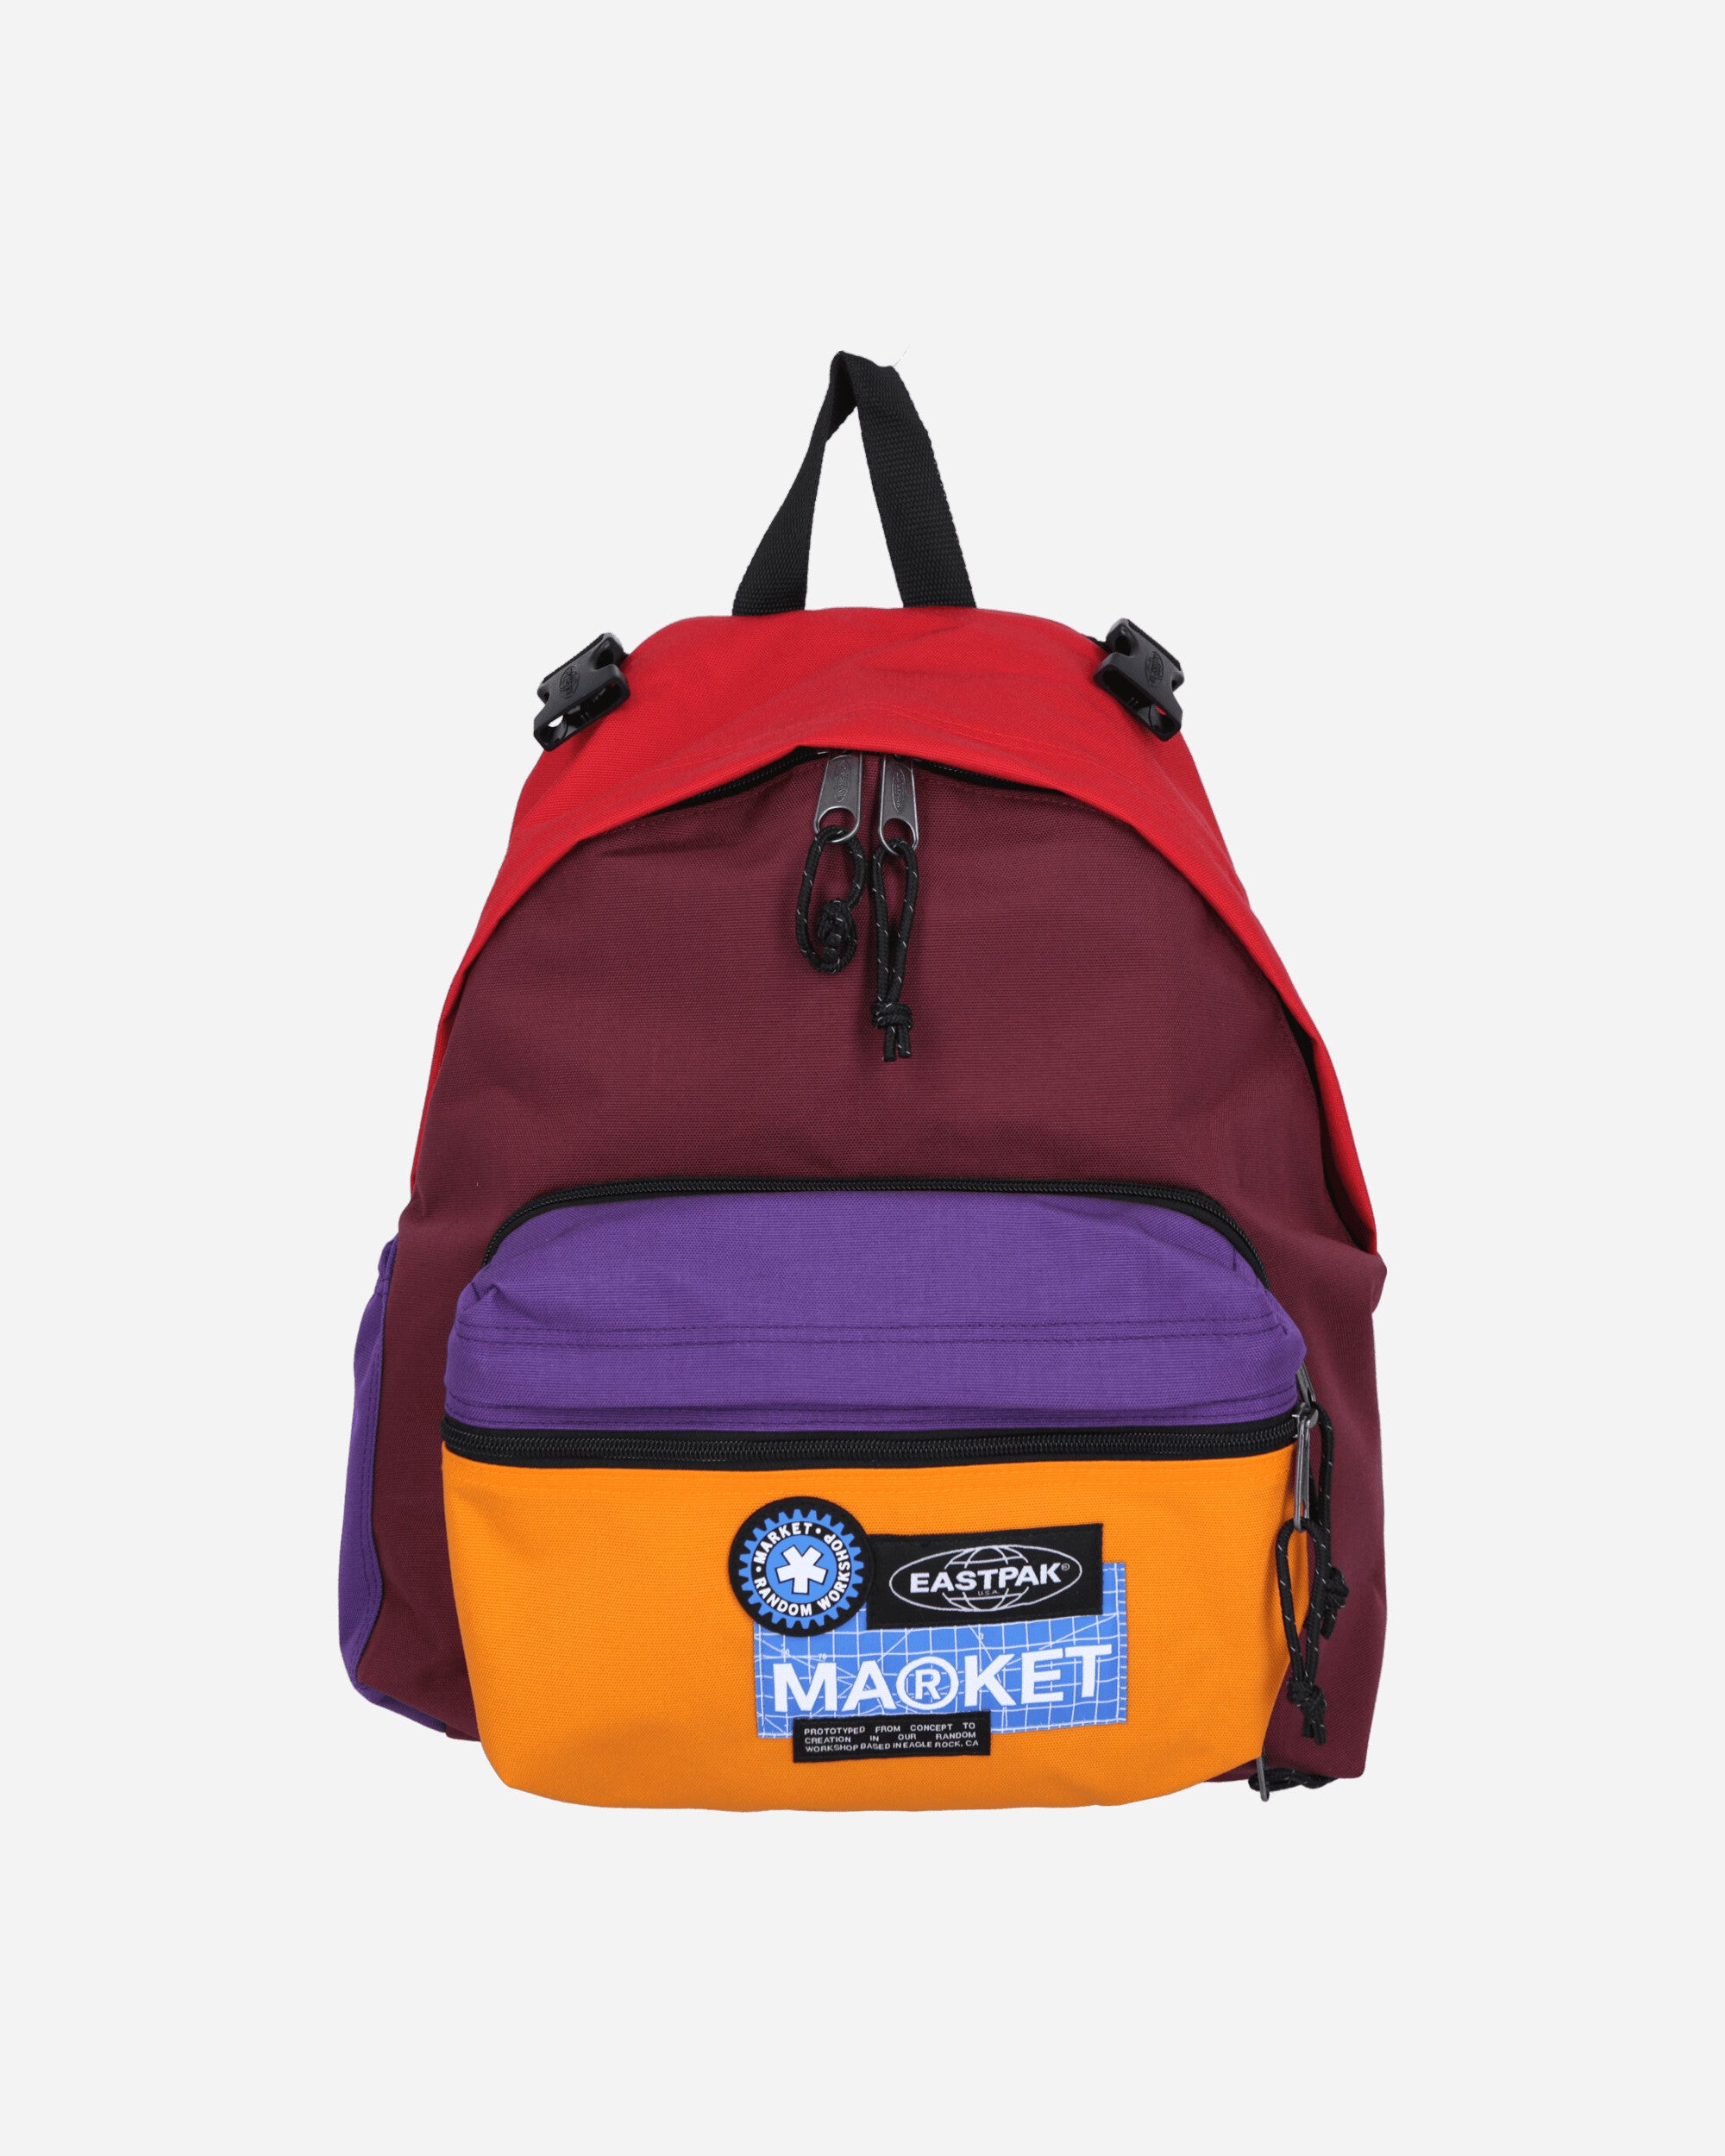 MARKET Basketball Backpack Multicolor